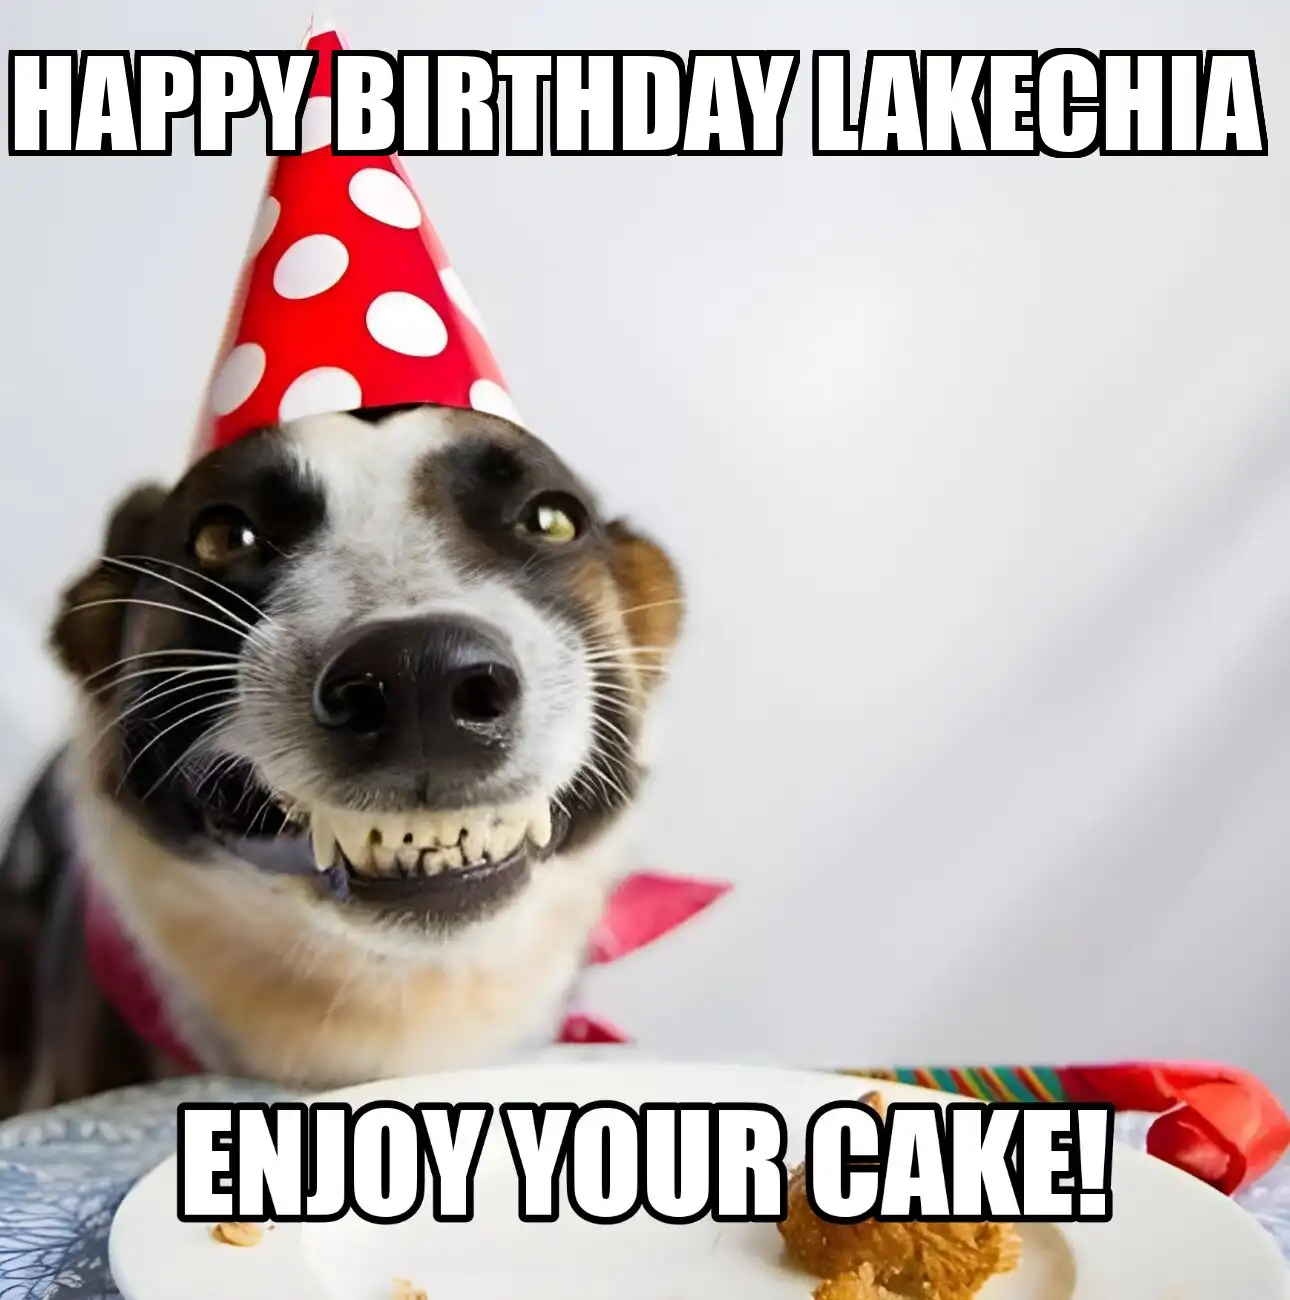 Happy Birthday Lakechia Enjoy Your Cake Dog Meme